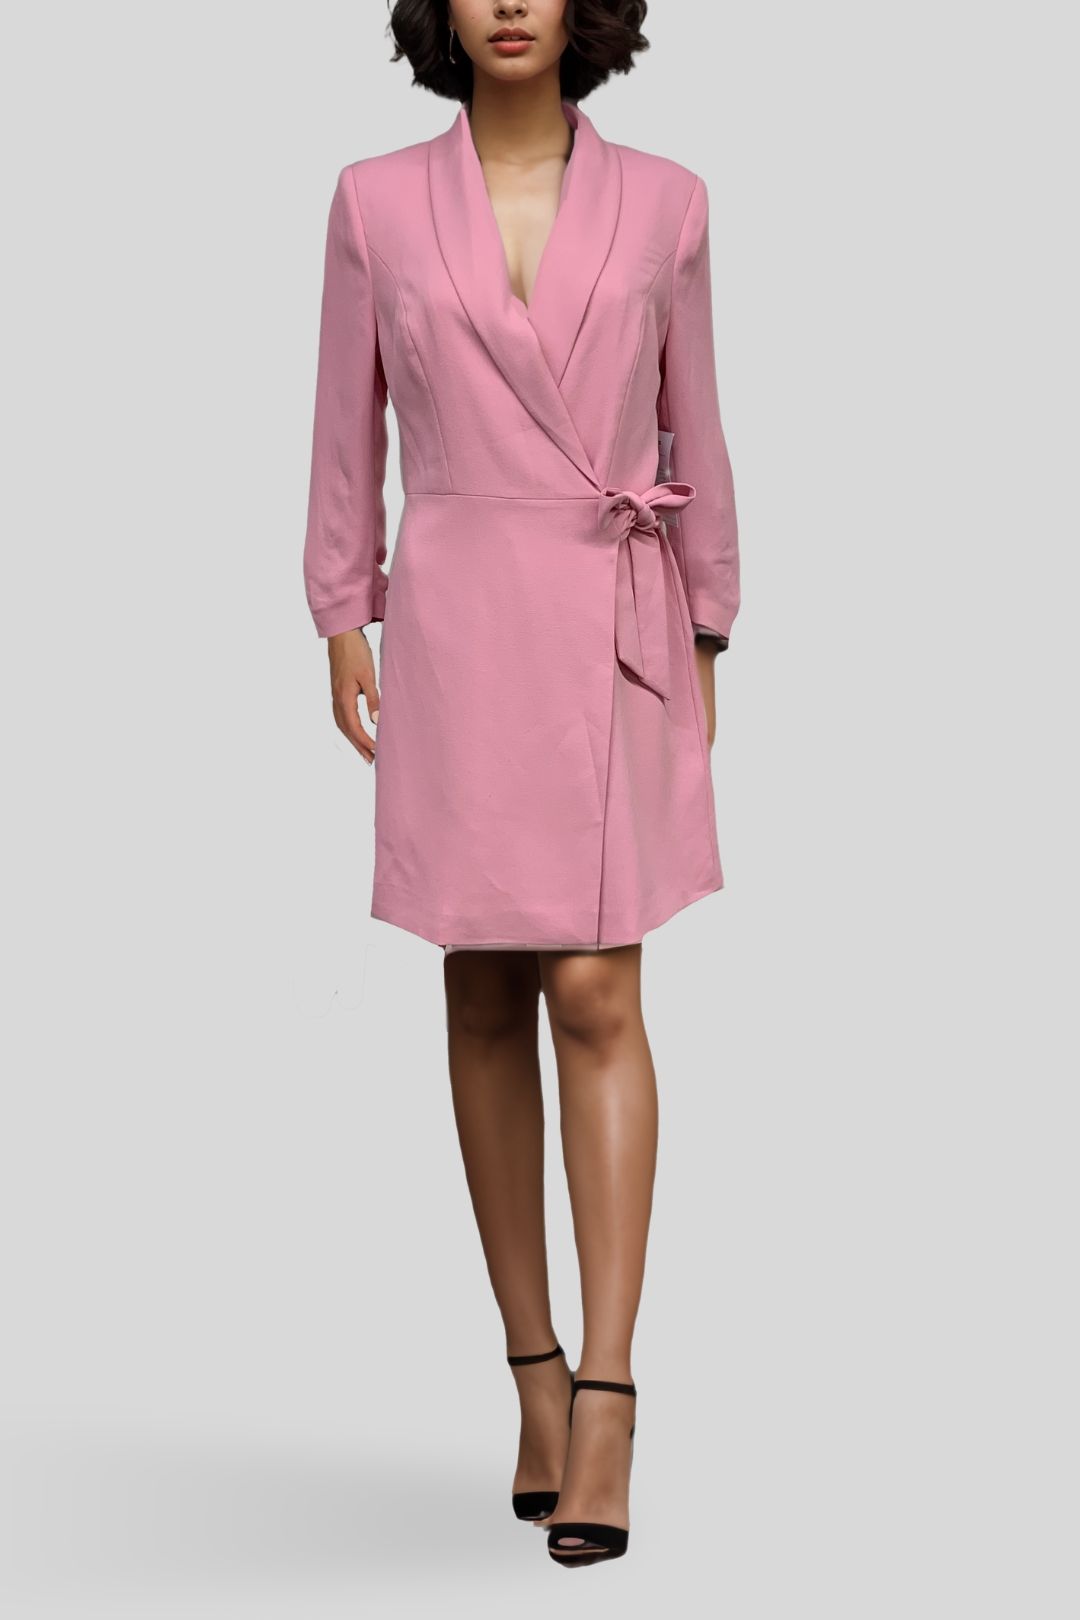 Portmans Blazer Pink Dress